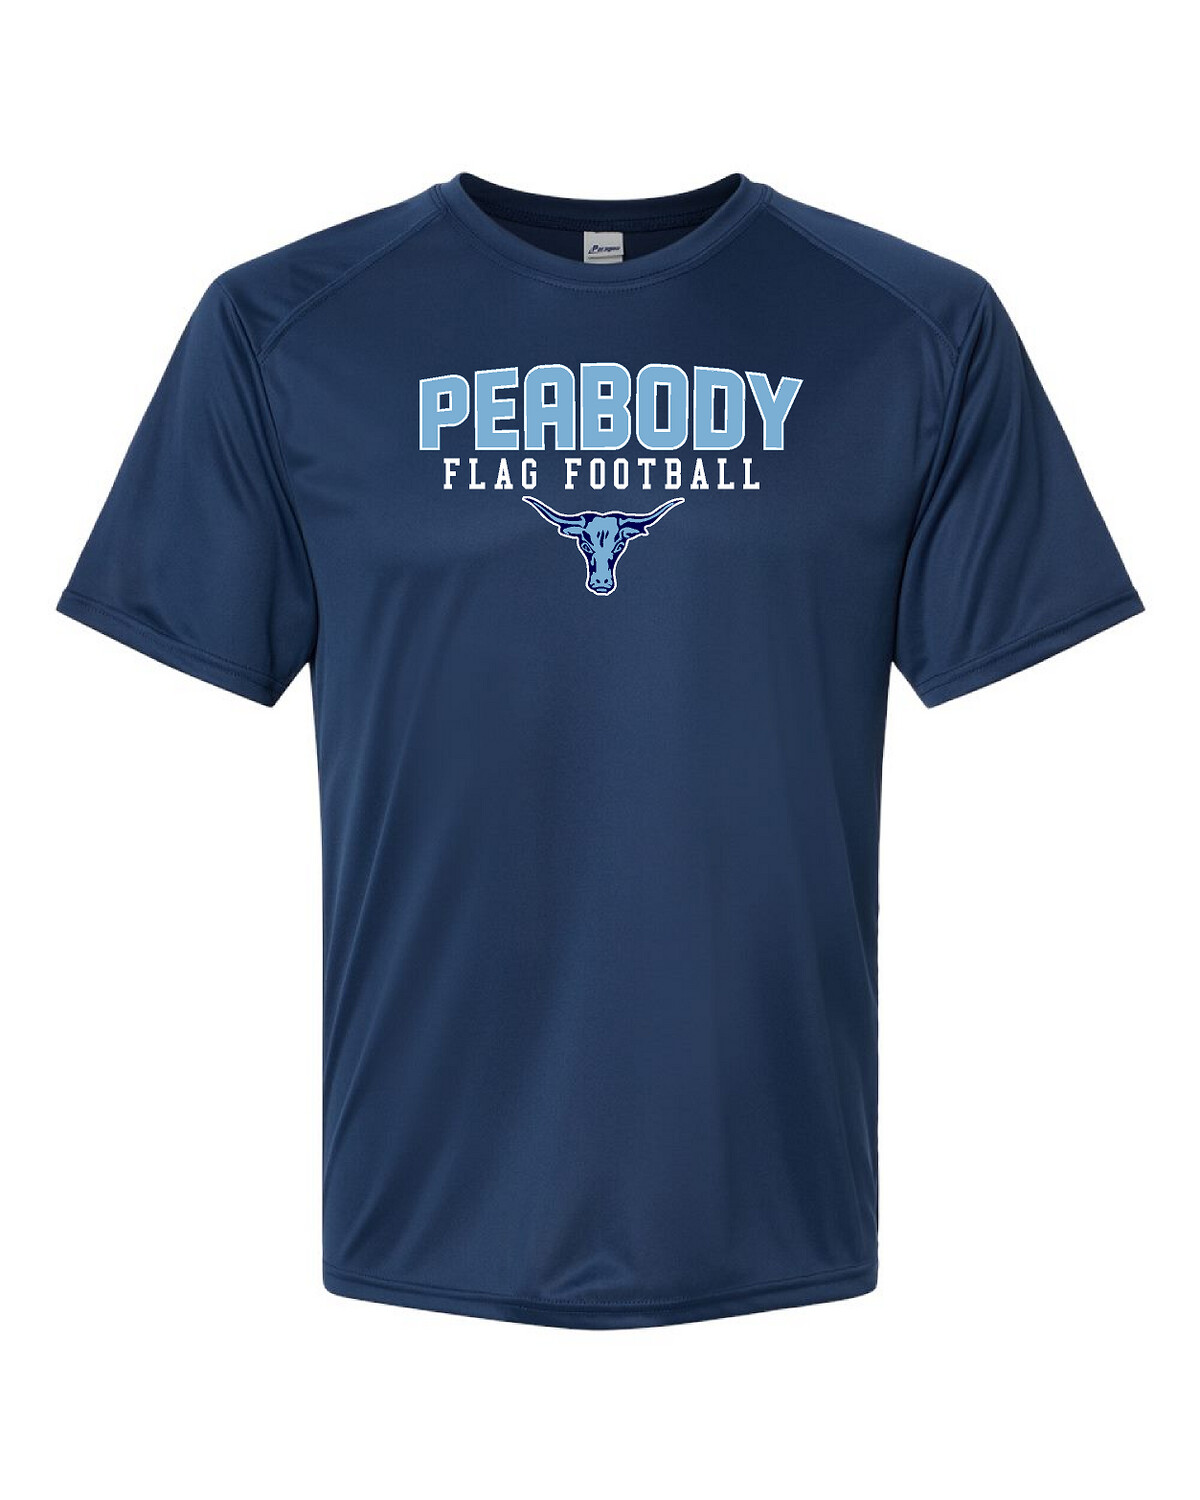 Peabody High Flag Football Short Sleeve Dri-Fit Shirt W/ UPF 50+ Protection